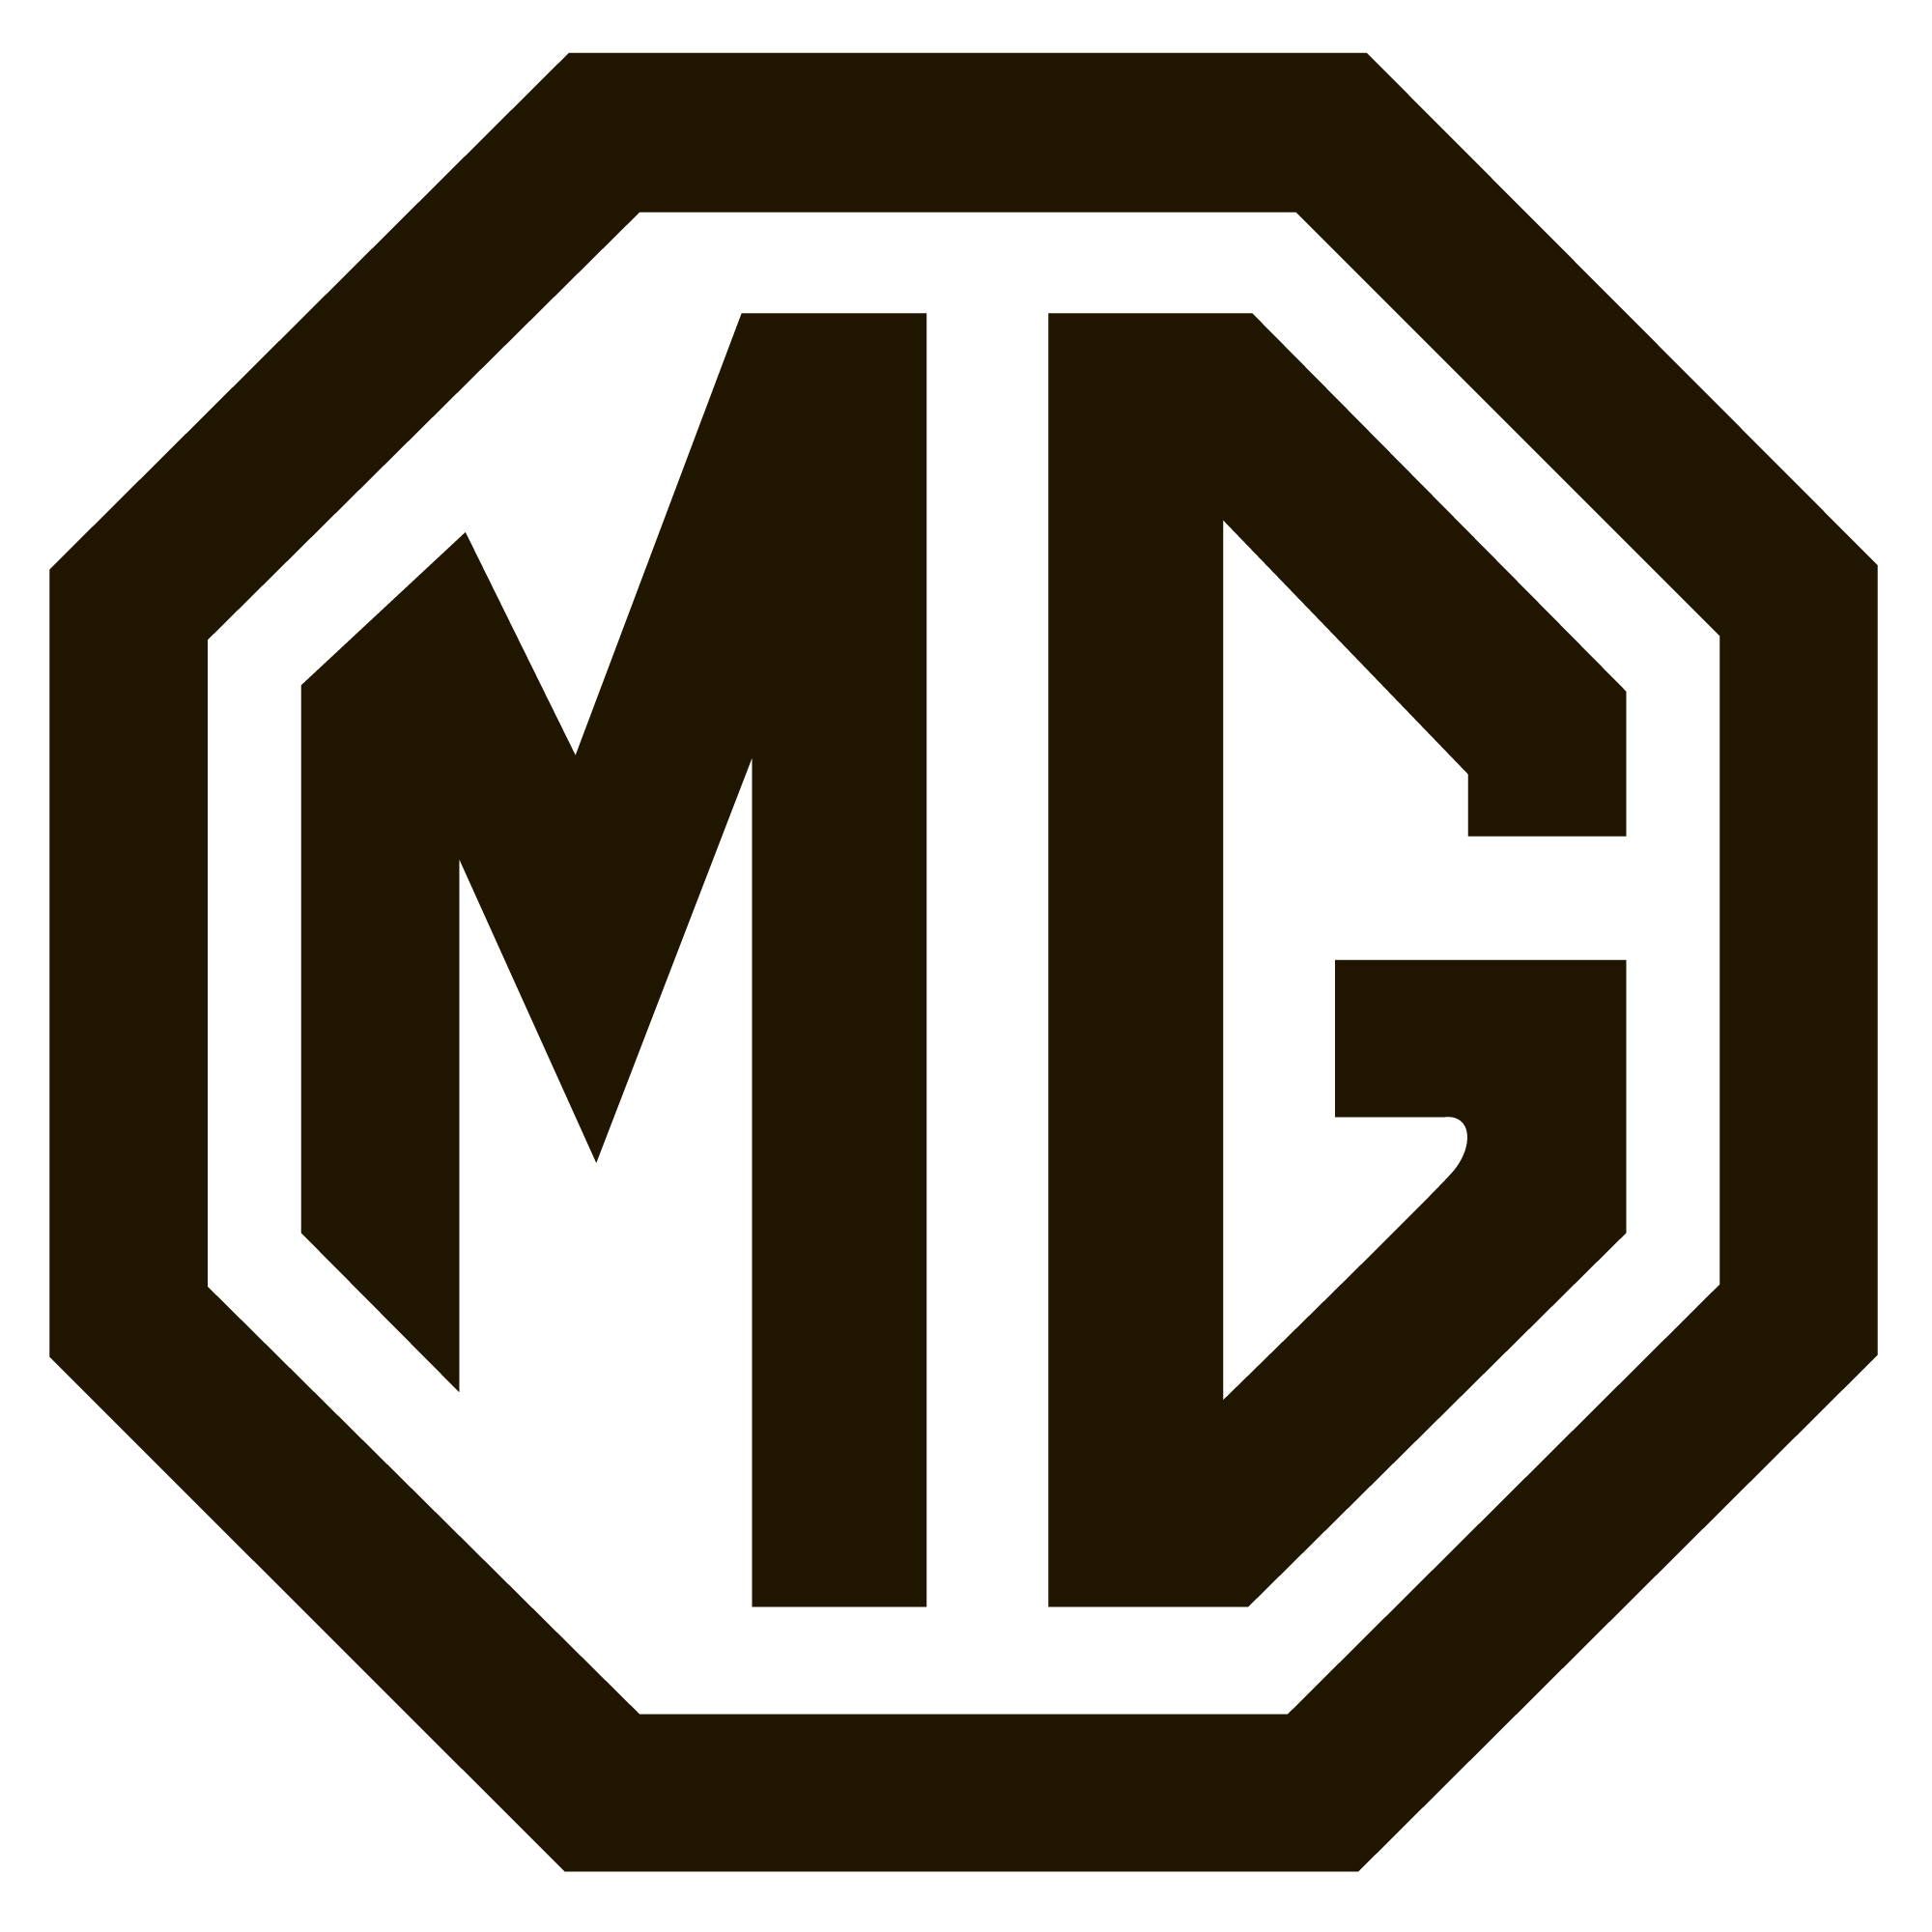 Concessionnaire agréé MG Motor Cannes